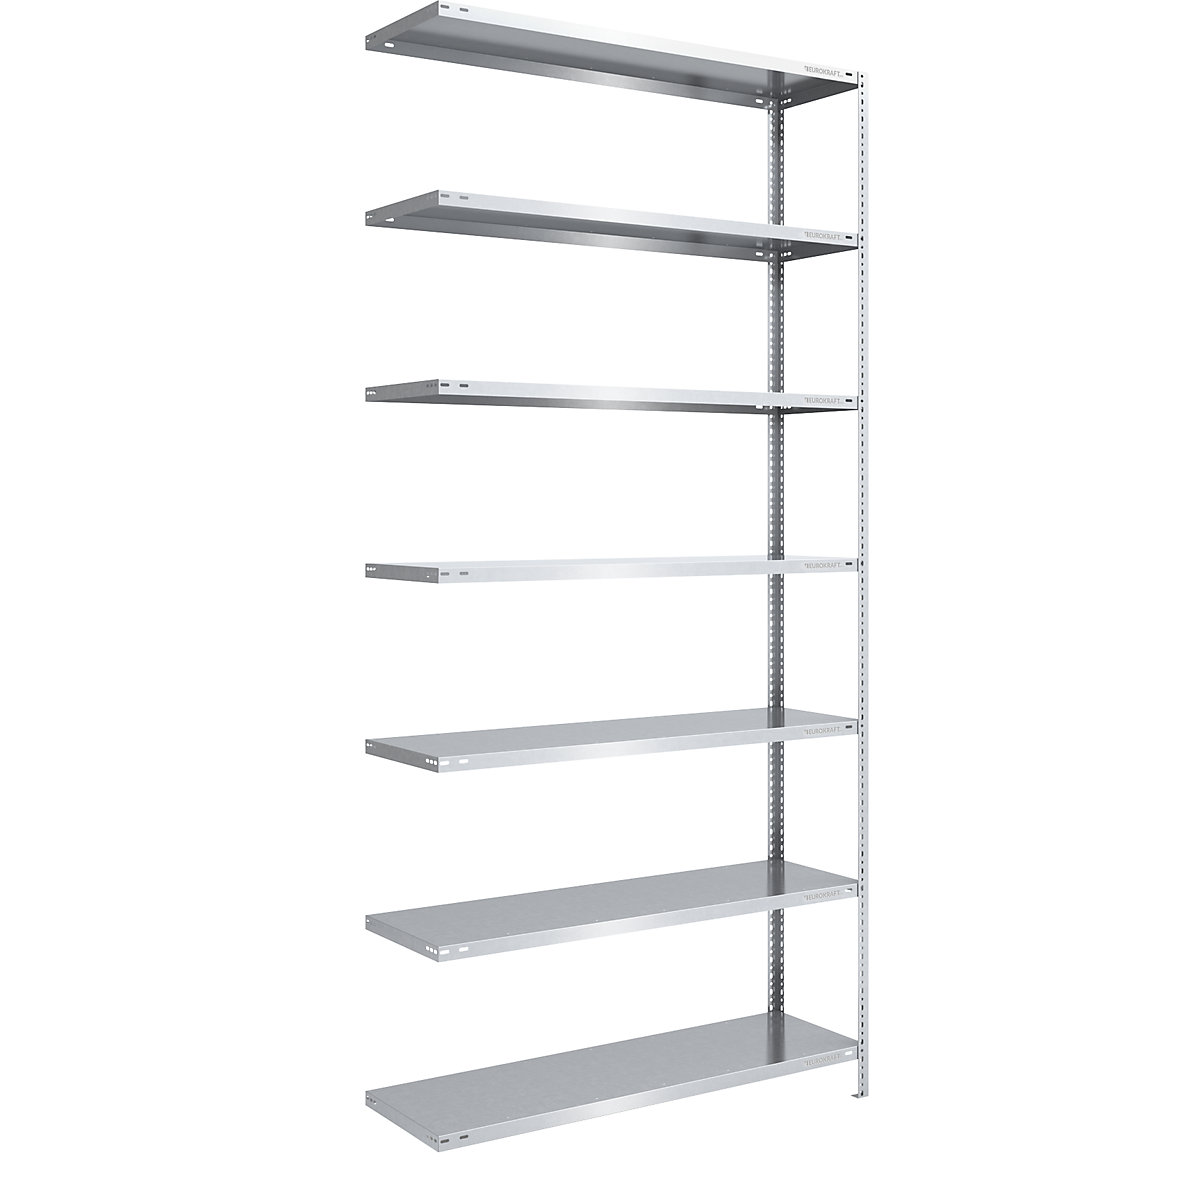 Bolt-together storage shelving, zinc plated, medium duty – eurokraft pro, shelf unit height 3000 mm, shelf width 1300 mm, depth 500 mm, extension shelf unit-10